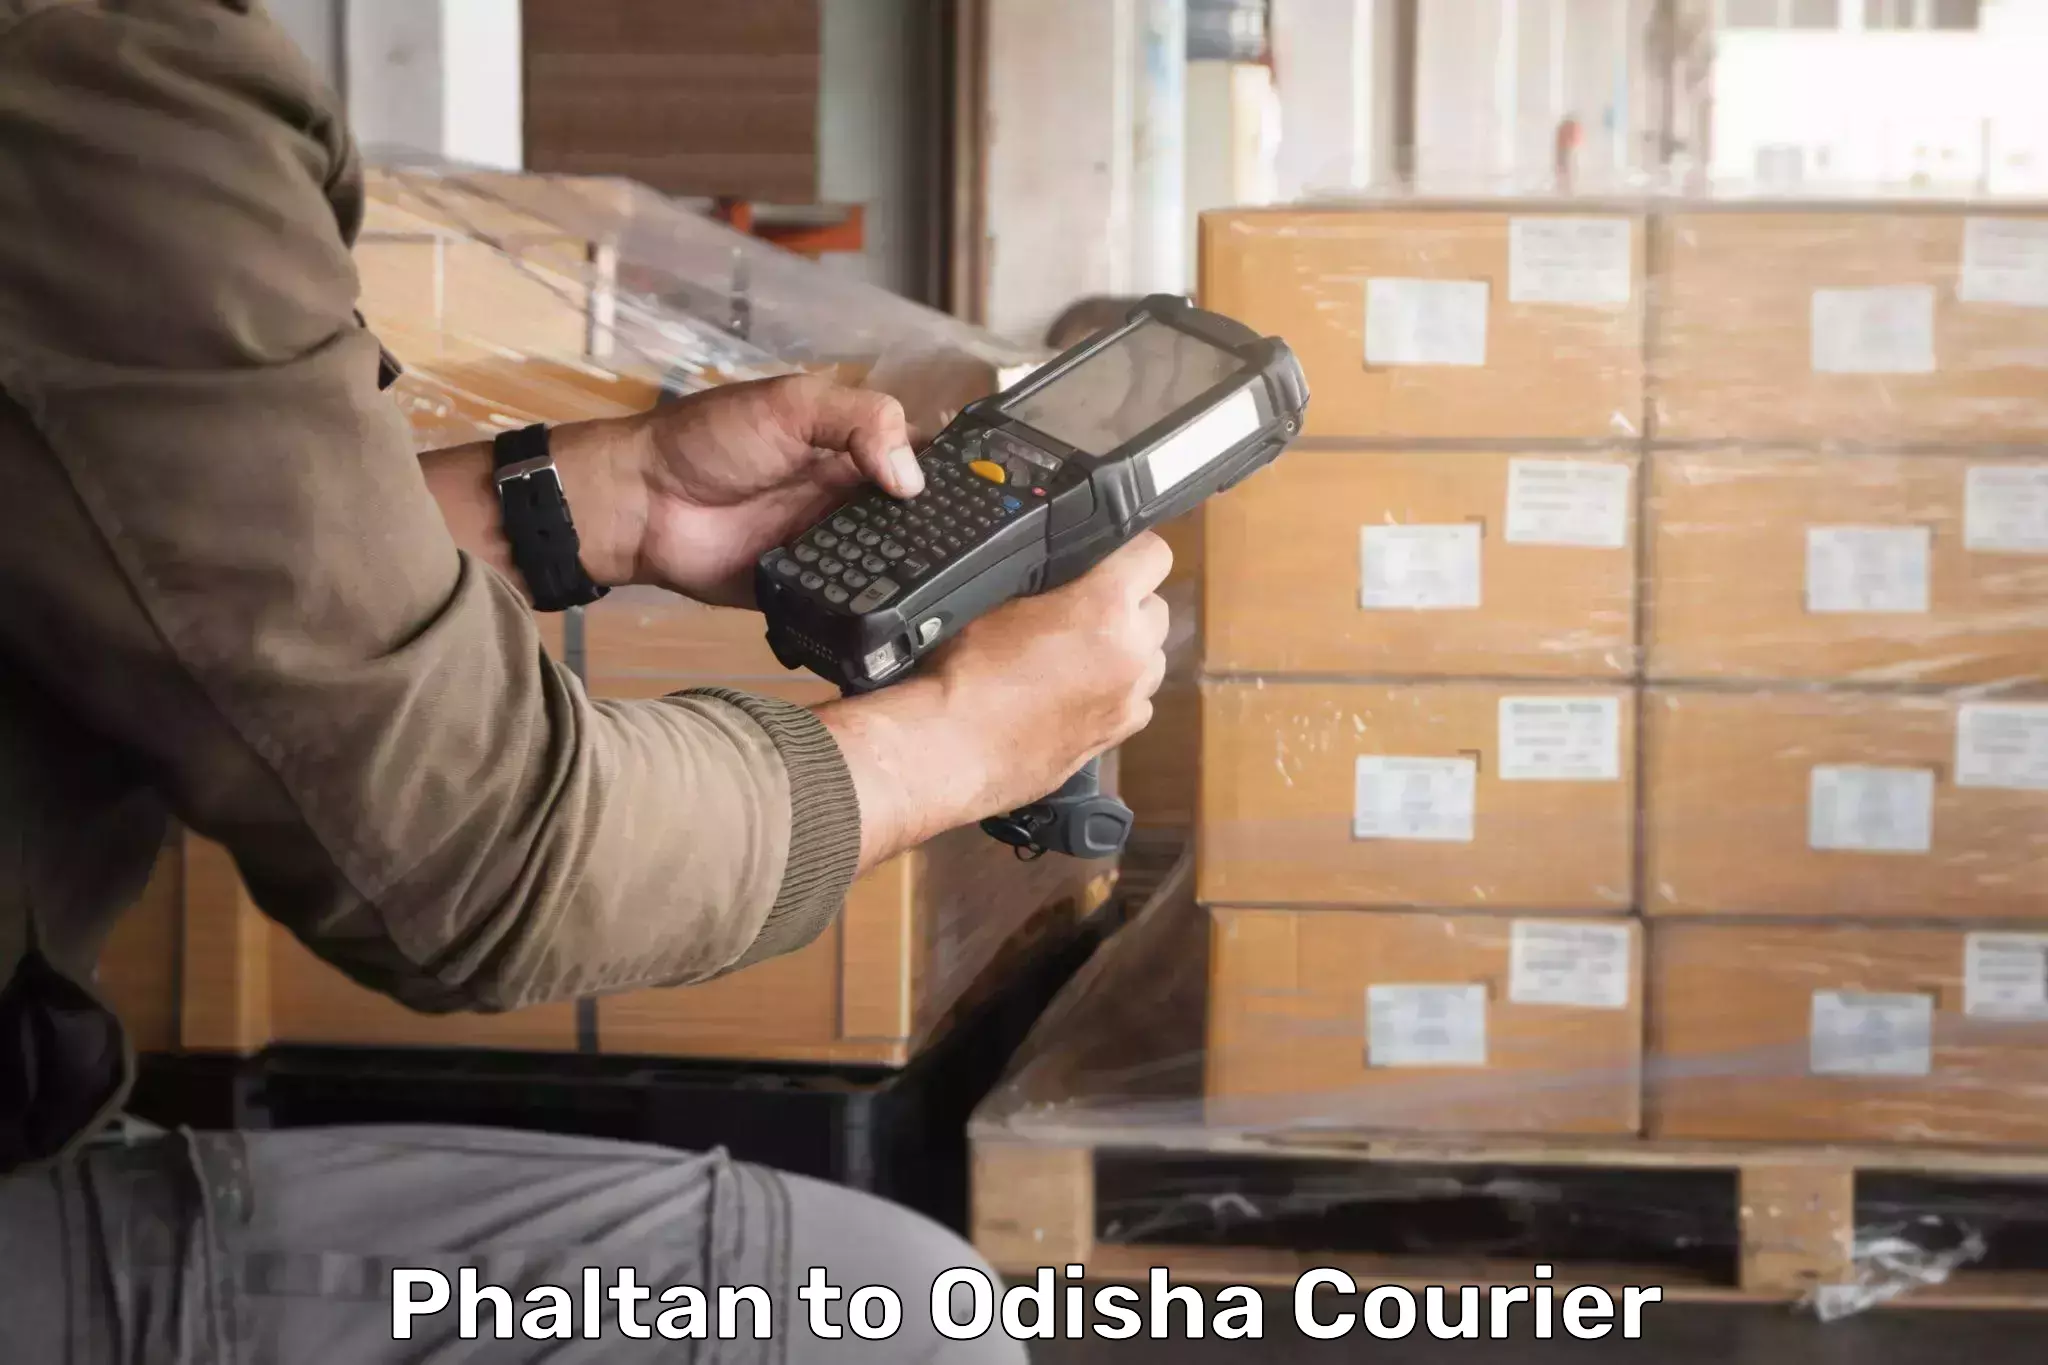 International courier networks Phaltan to Odisha